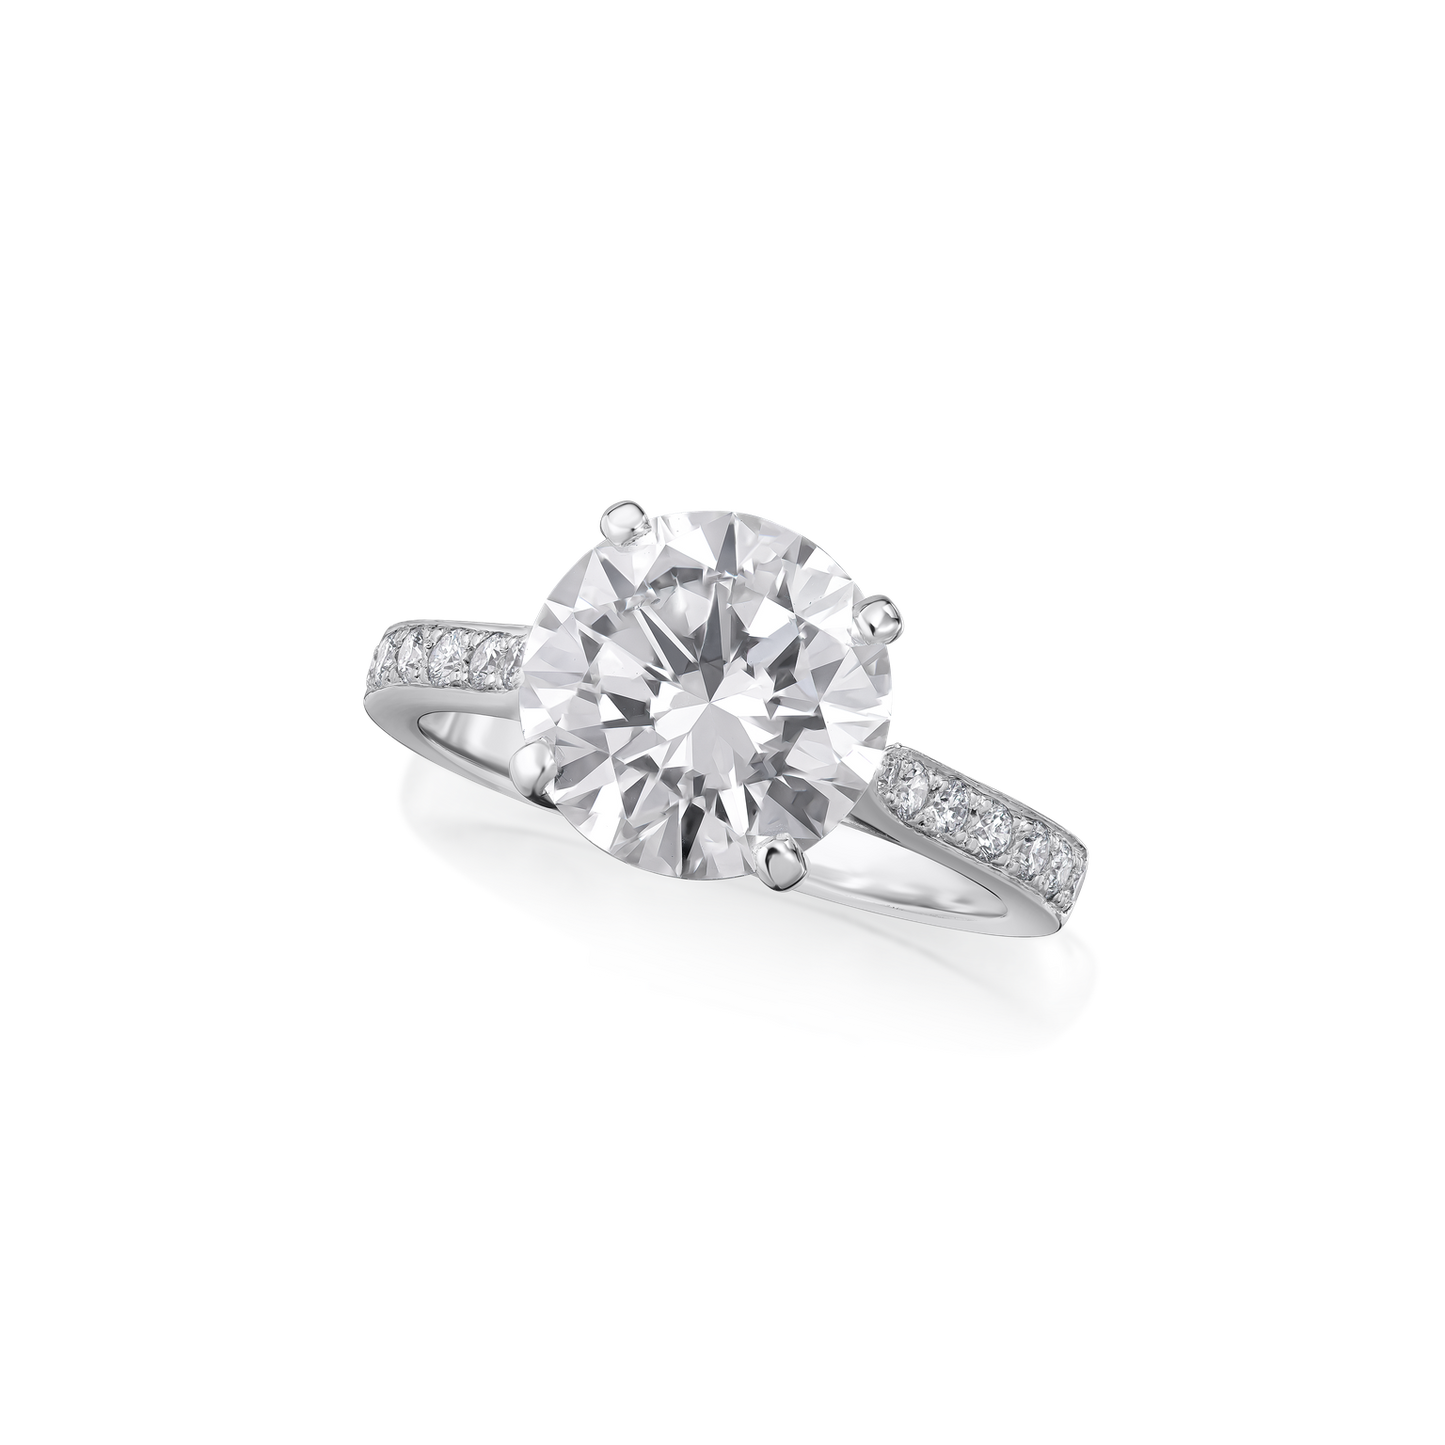 3.25cts Round Brilliant-Cut Diamond Ring